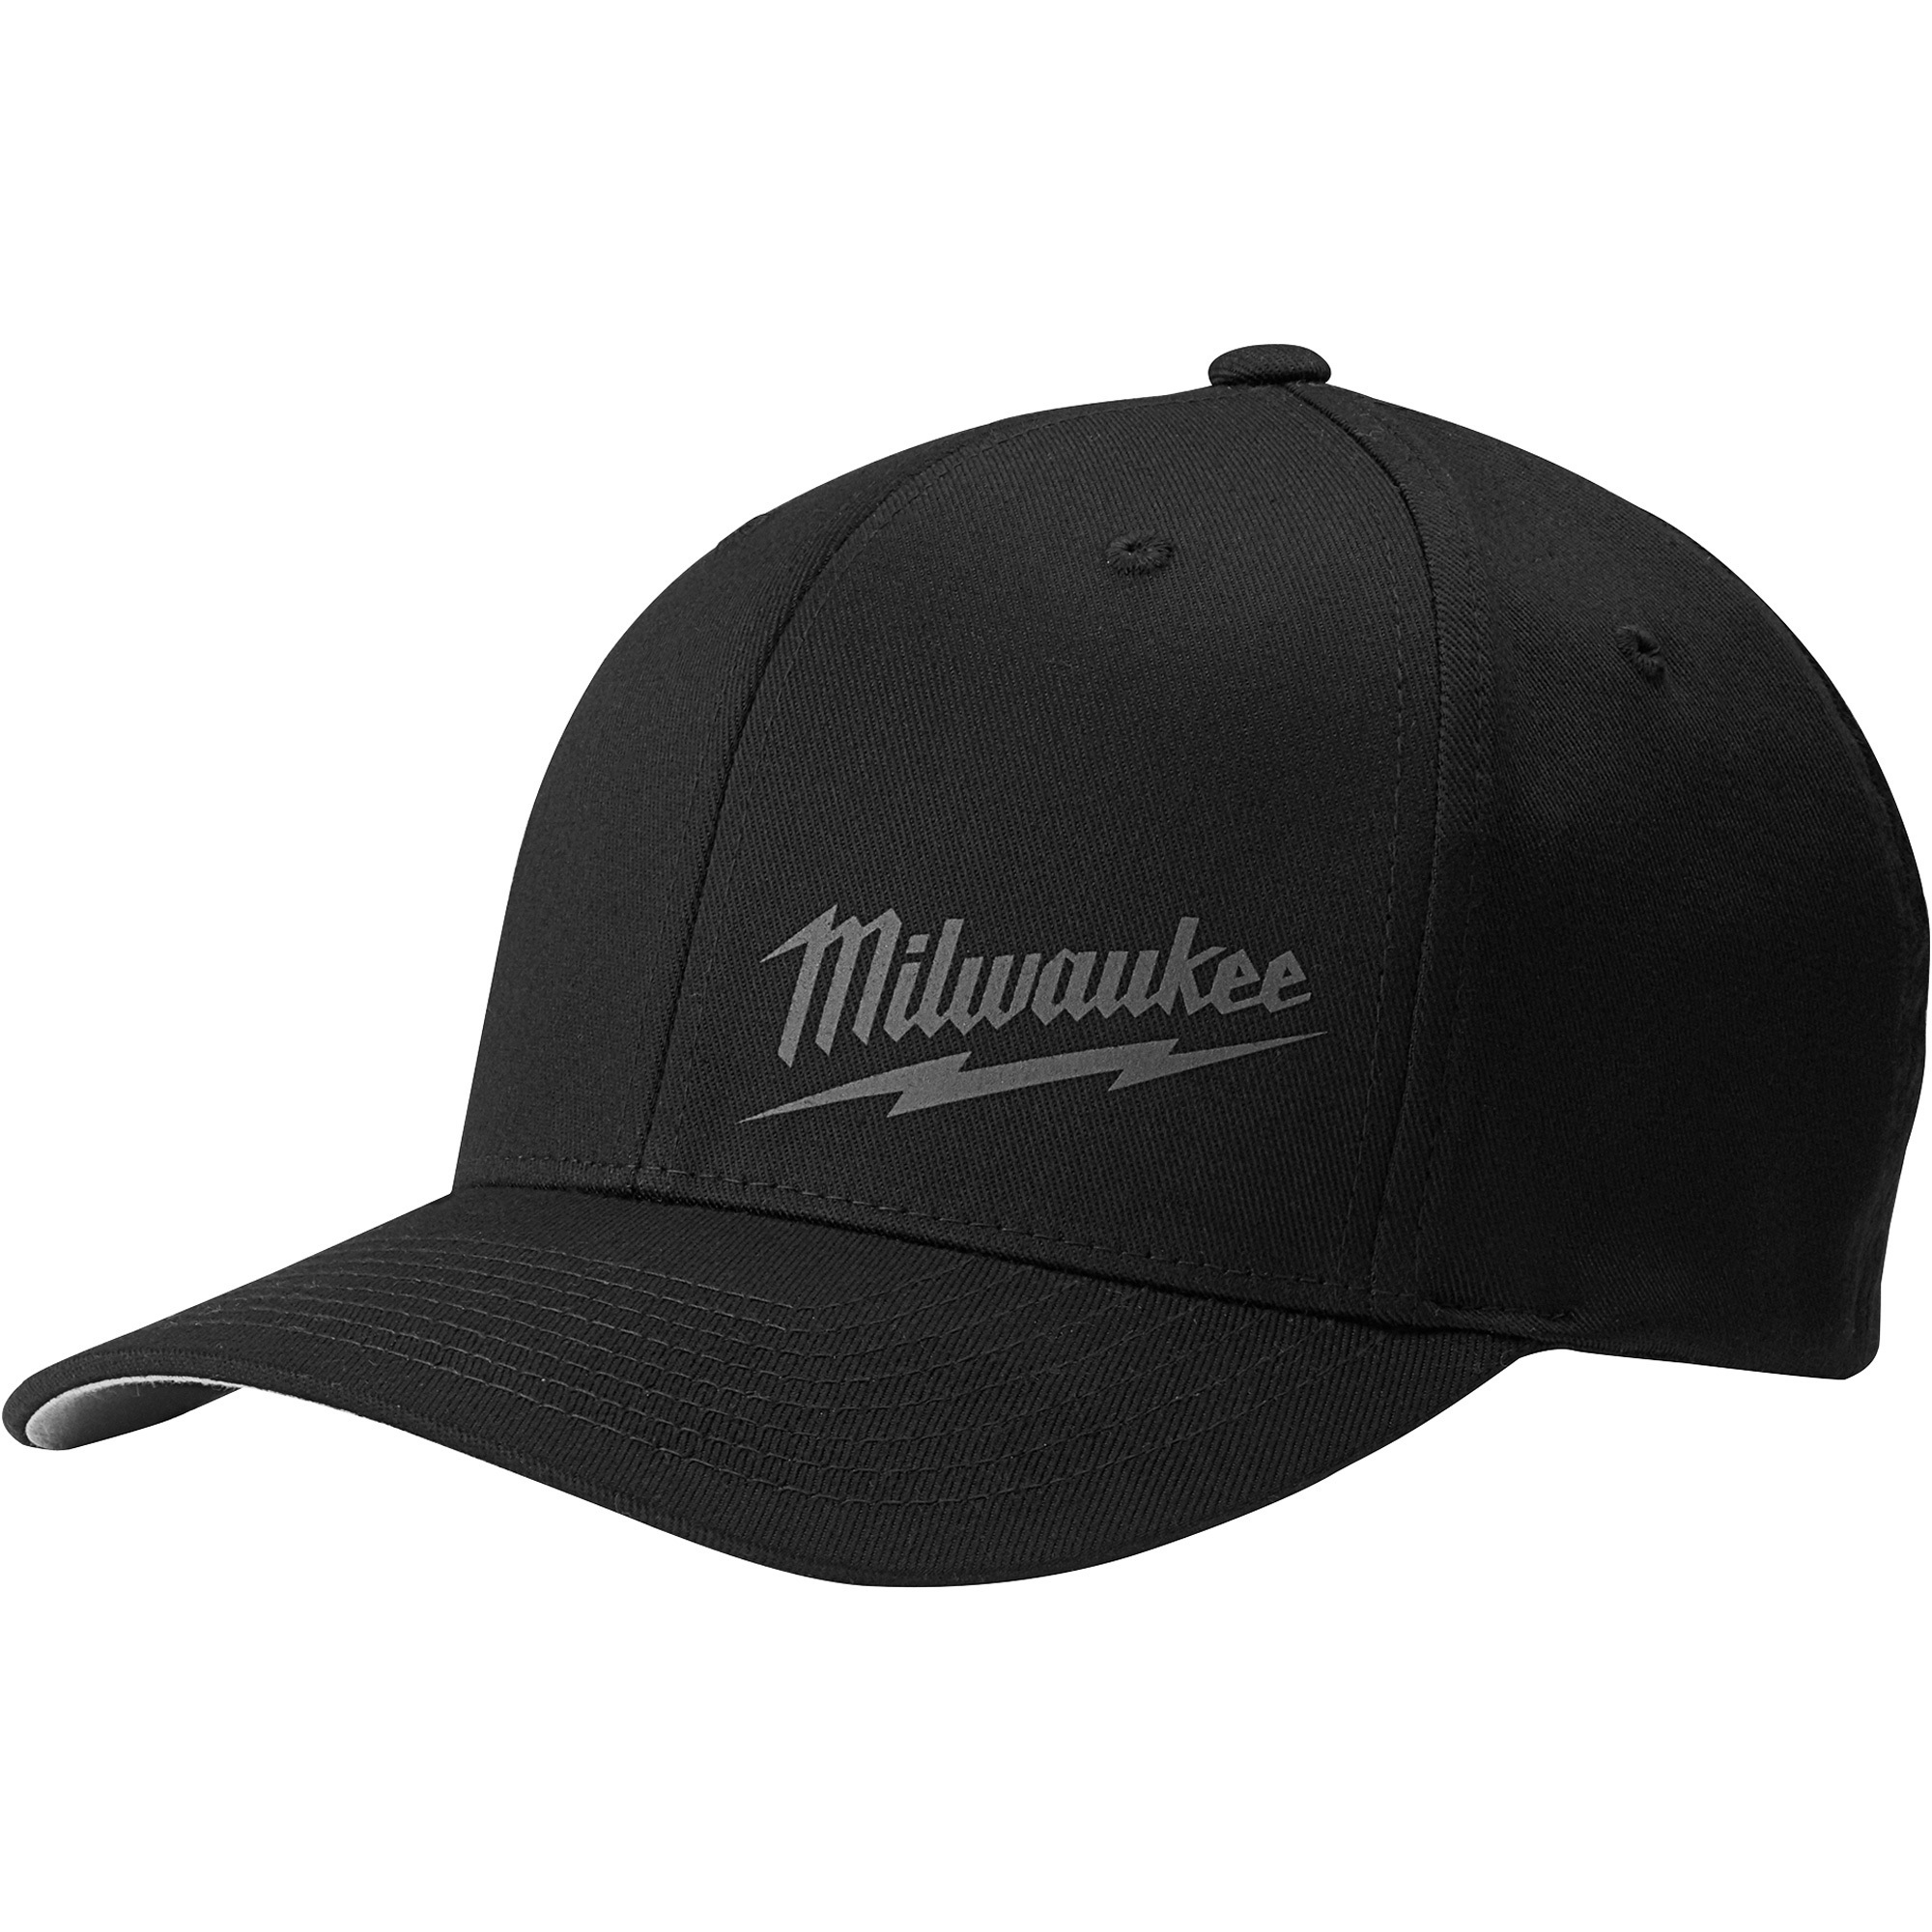 Milwaukee Men's FLEXFIT Fitted Hat, Black, S/M, Model 504-SM